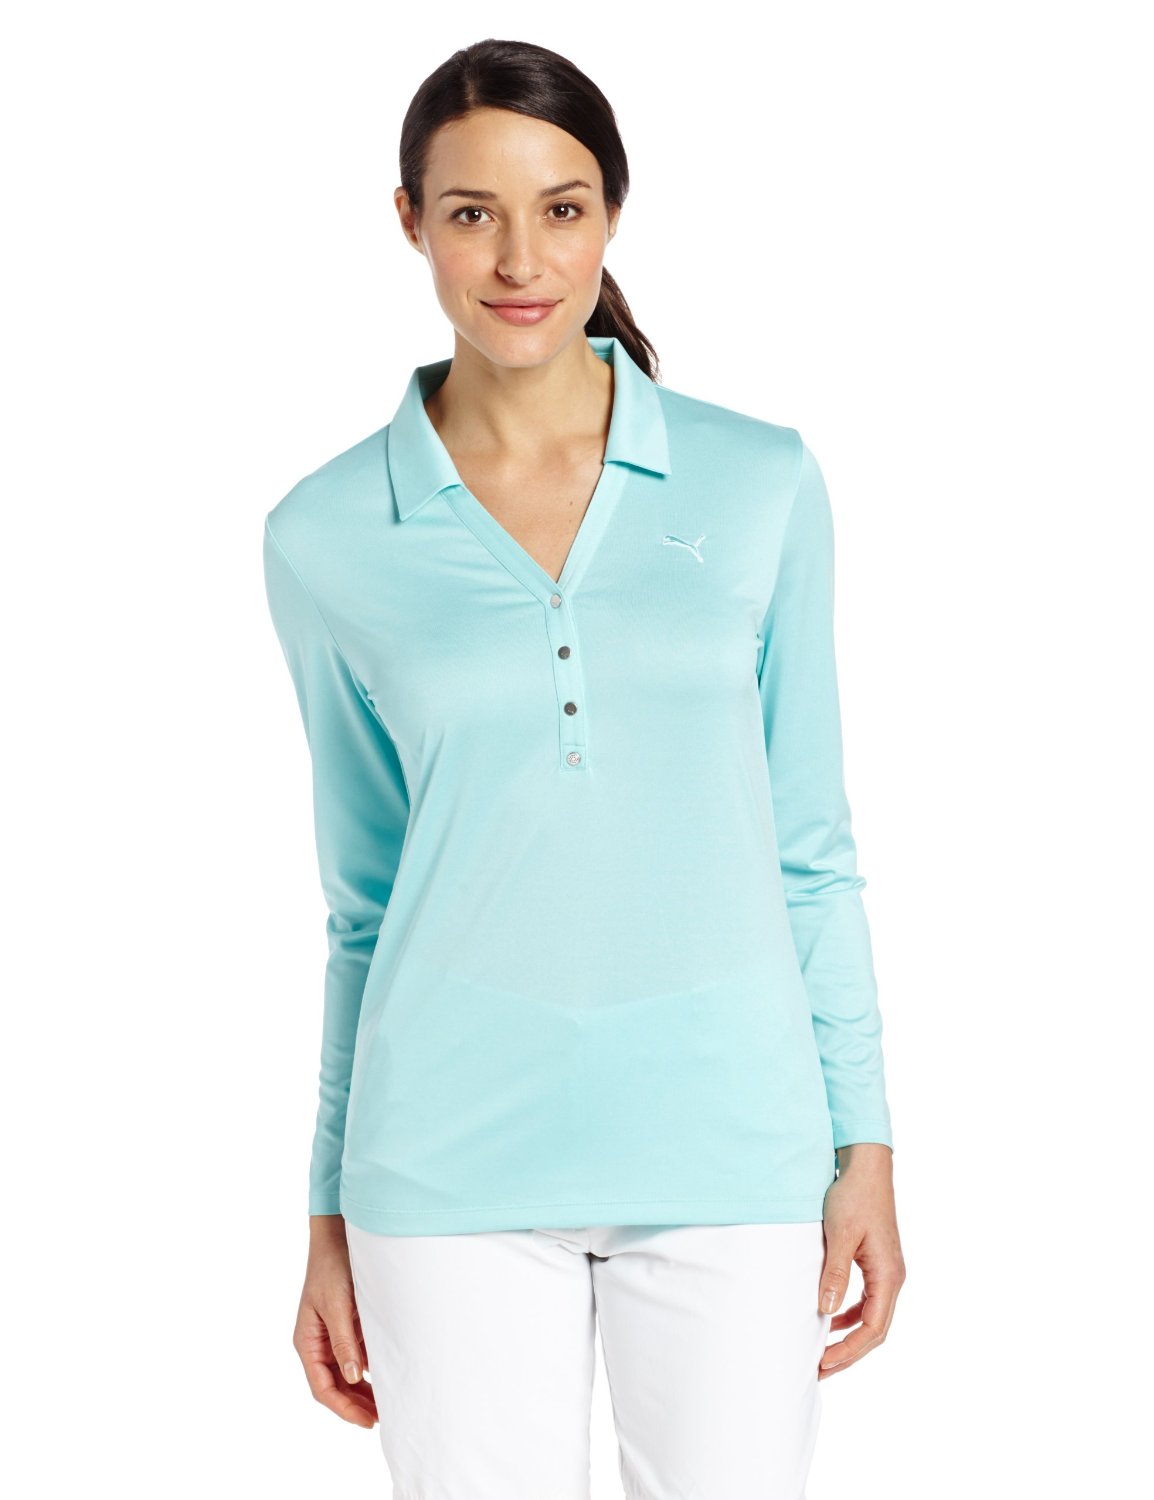 Puma Womens NA Long Sleeve Golf Shirts